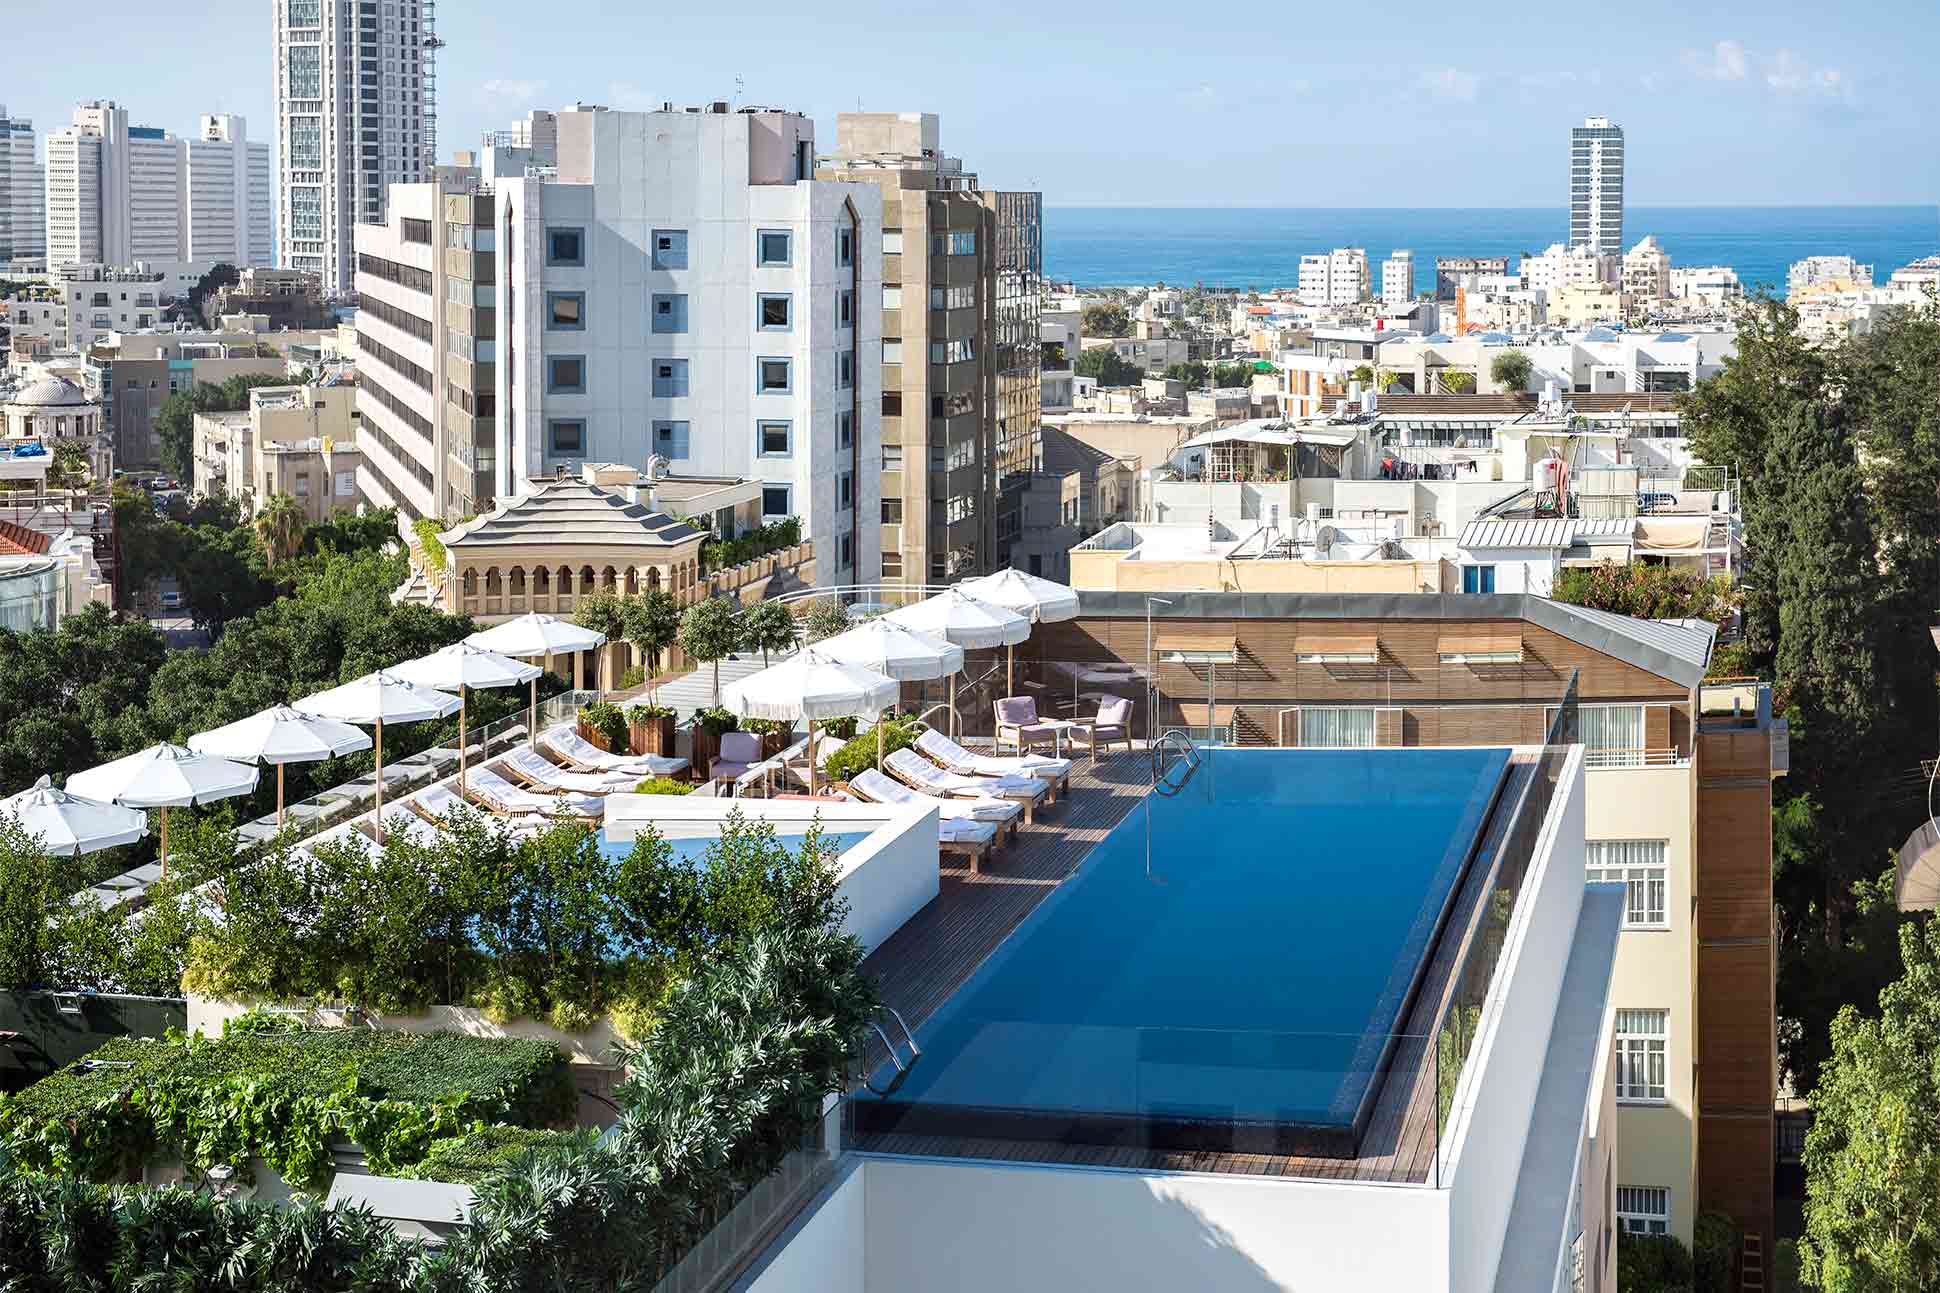 Rooftop pool at The Norman, Tel Aviv, Israel